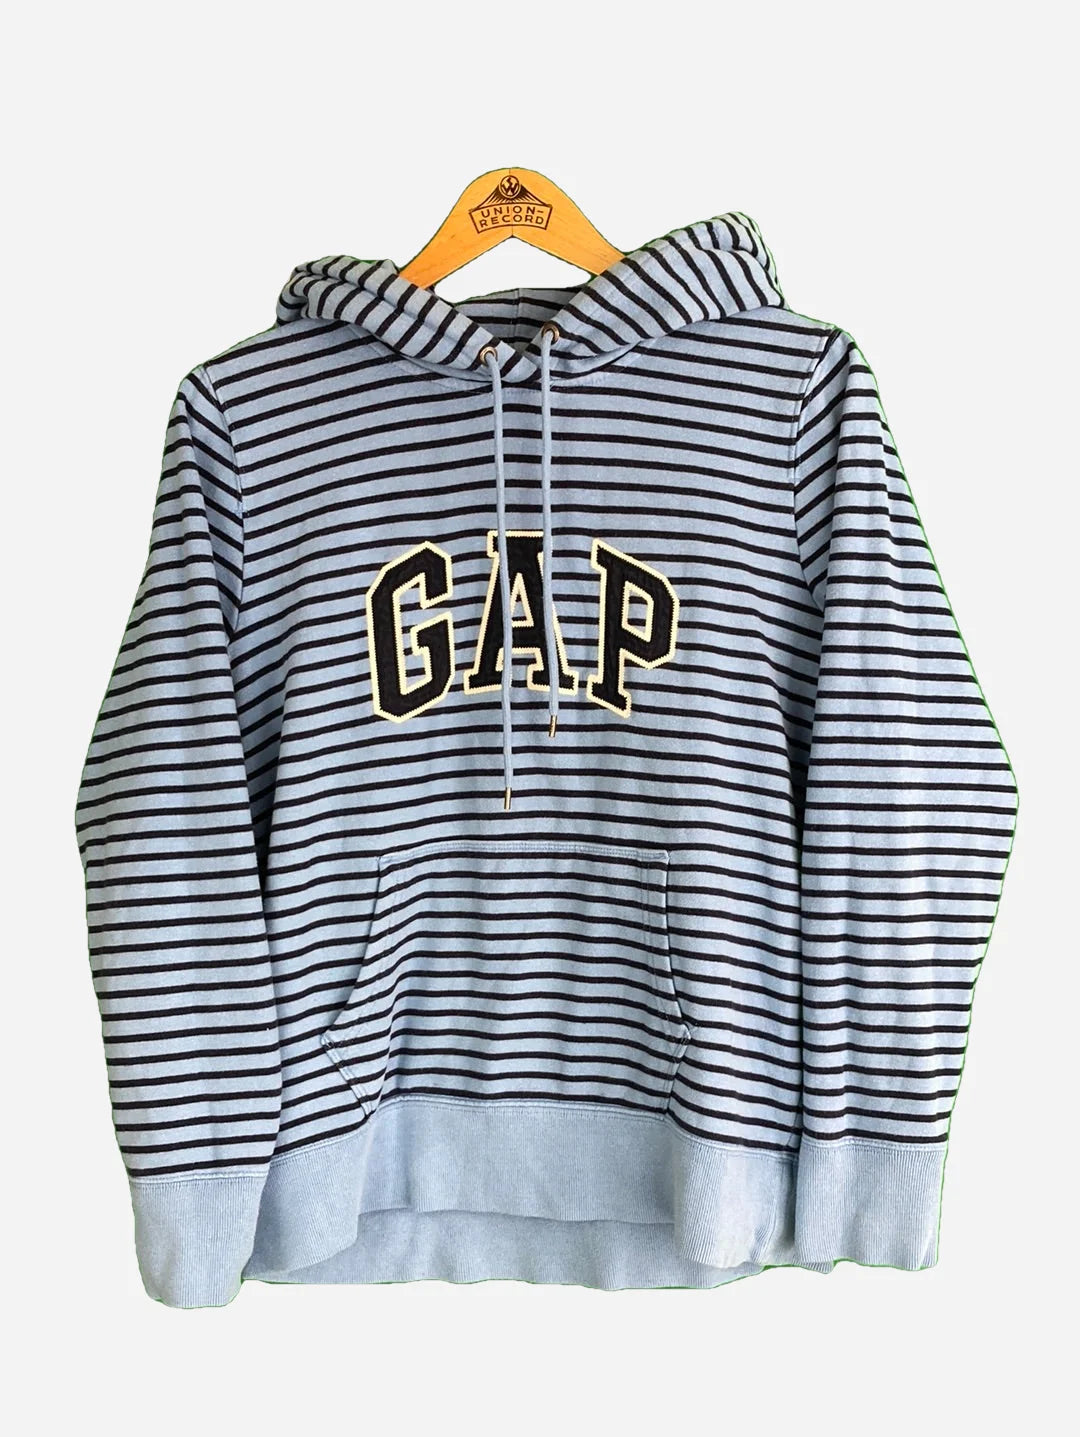 Gap Sweater (S)